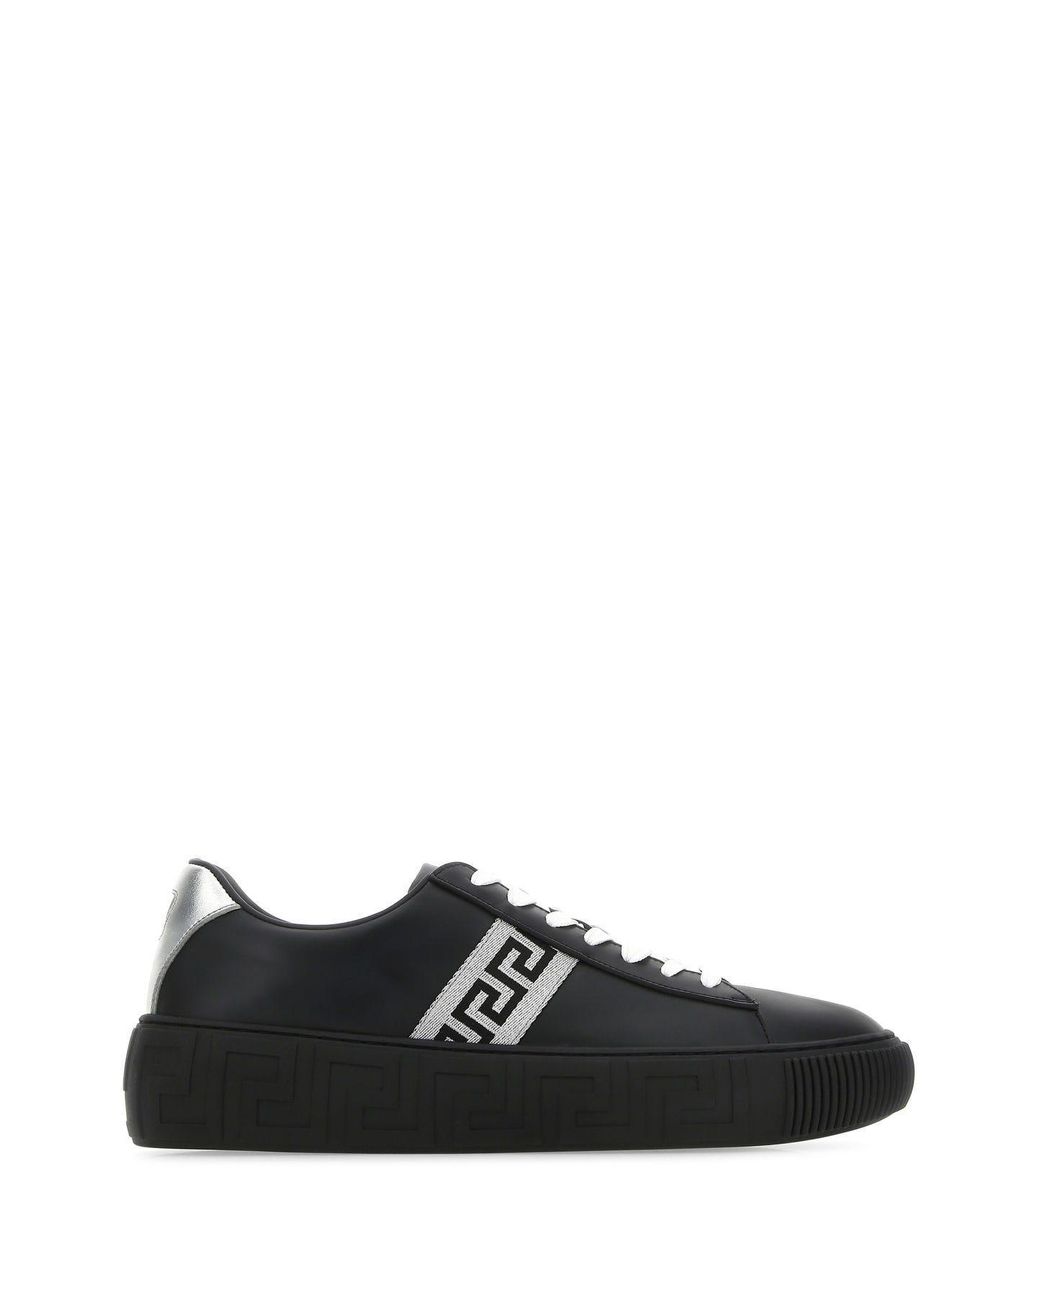 Versace Black Leather Greca Sneakers for Men | Lyst